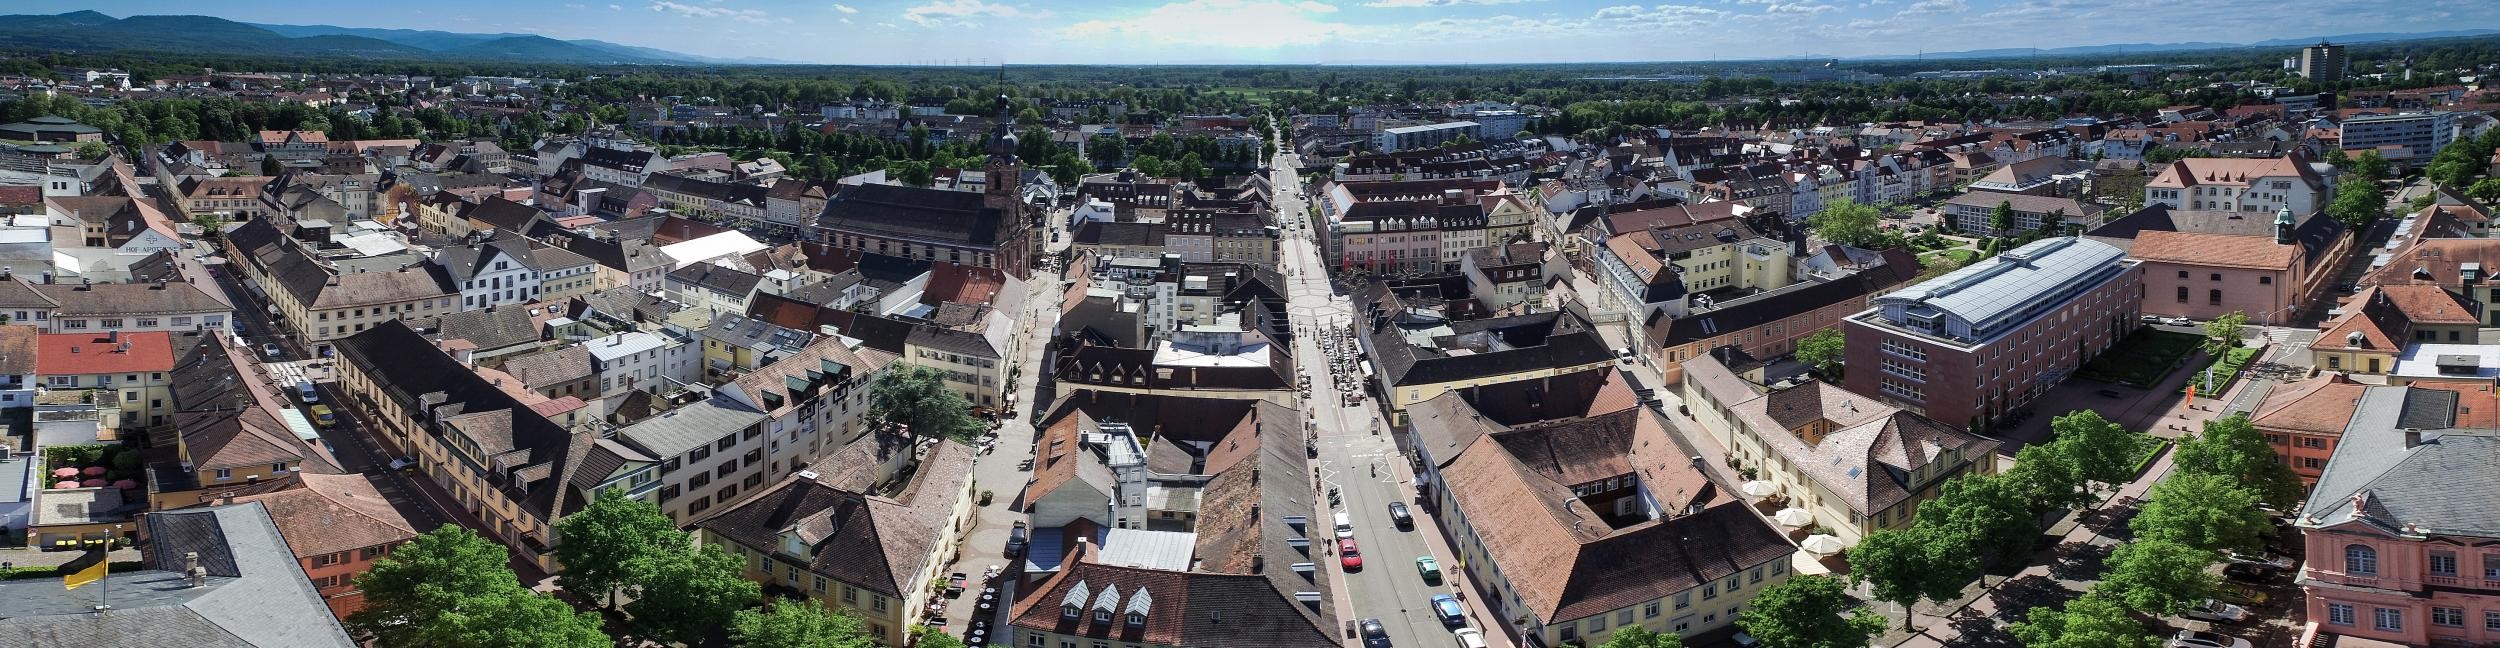 Aerial view of Rastatt city center from above.